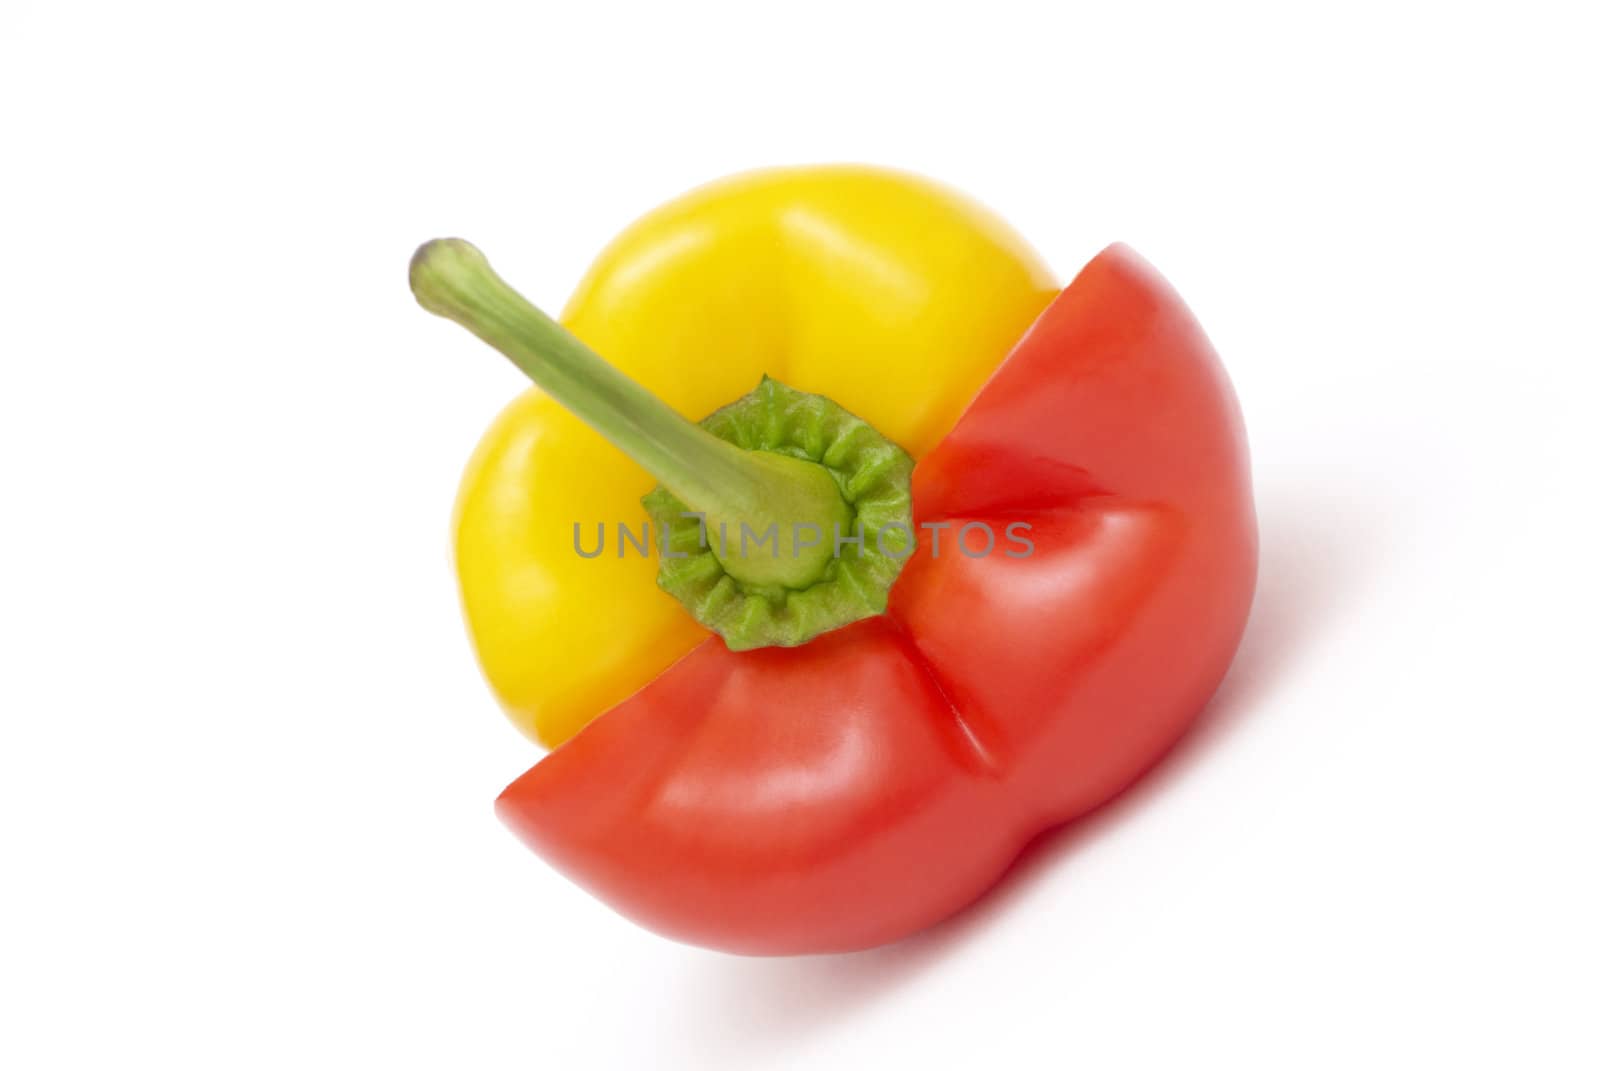 Coloured pepper diagonally by Olinkau